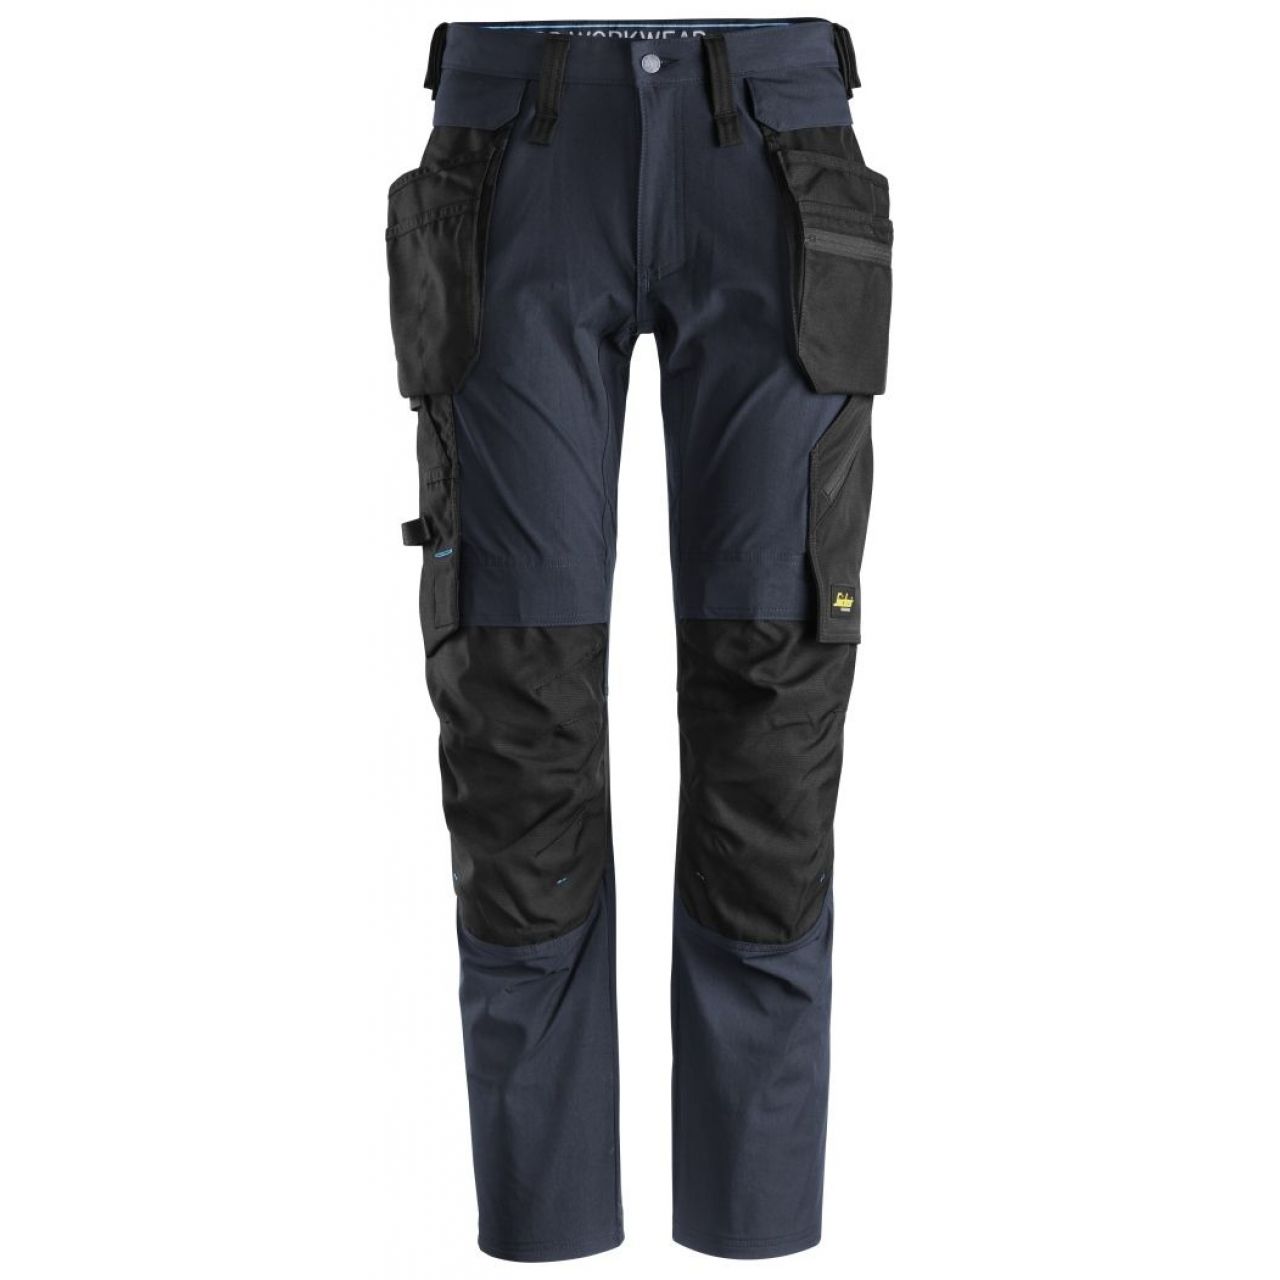 Pantalon + bolsillos flotantes desmontables LiteWork azul marino-negro talla 212